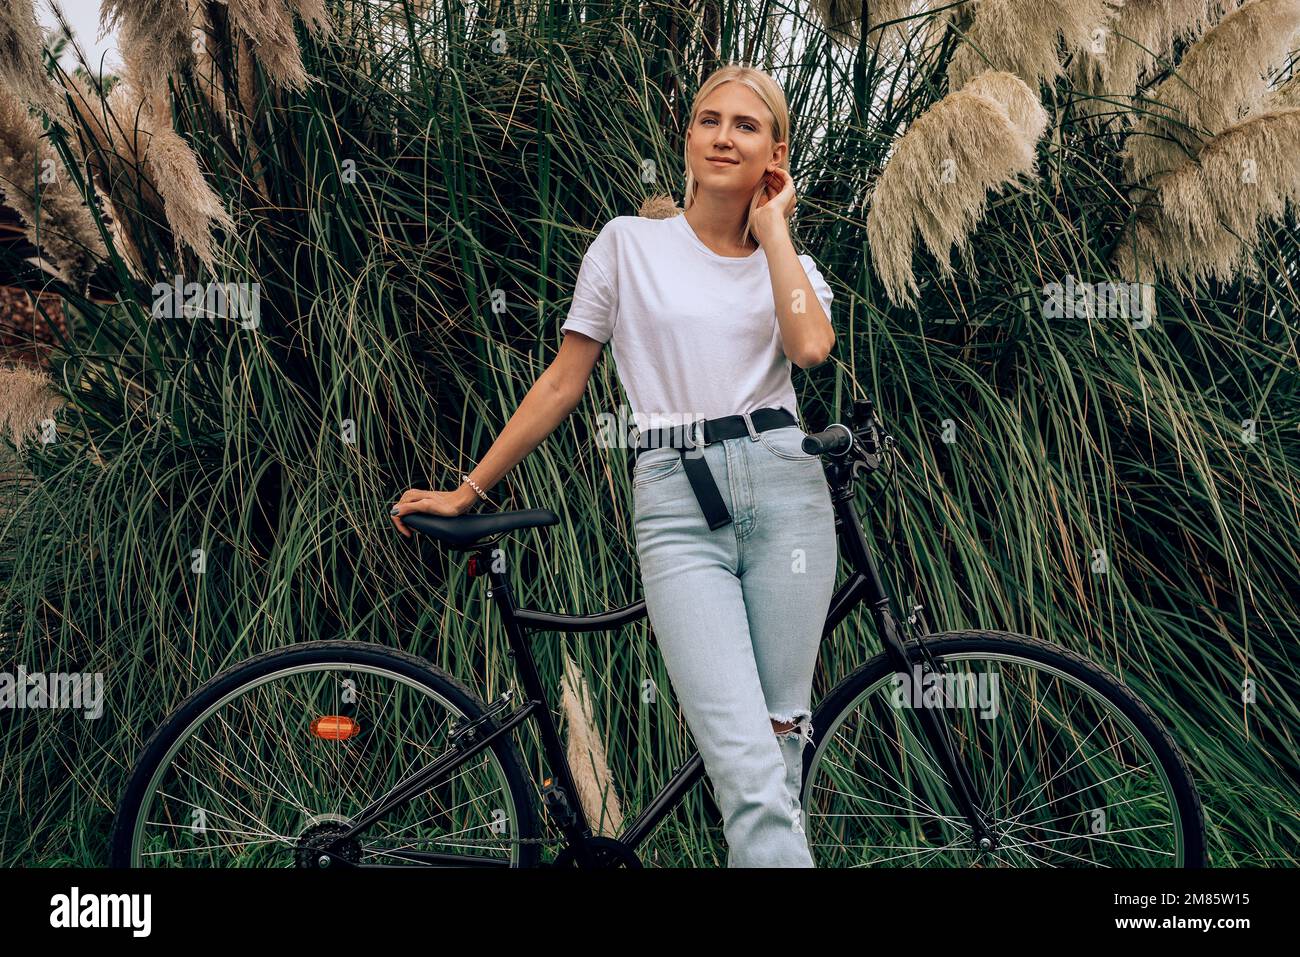 Young beautiful girl is posing in a white t-shirt next to her bike. Horizontal mockup. Stock Photo